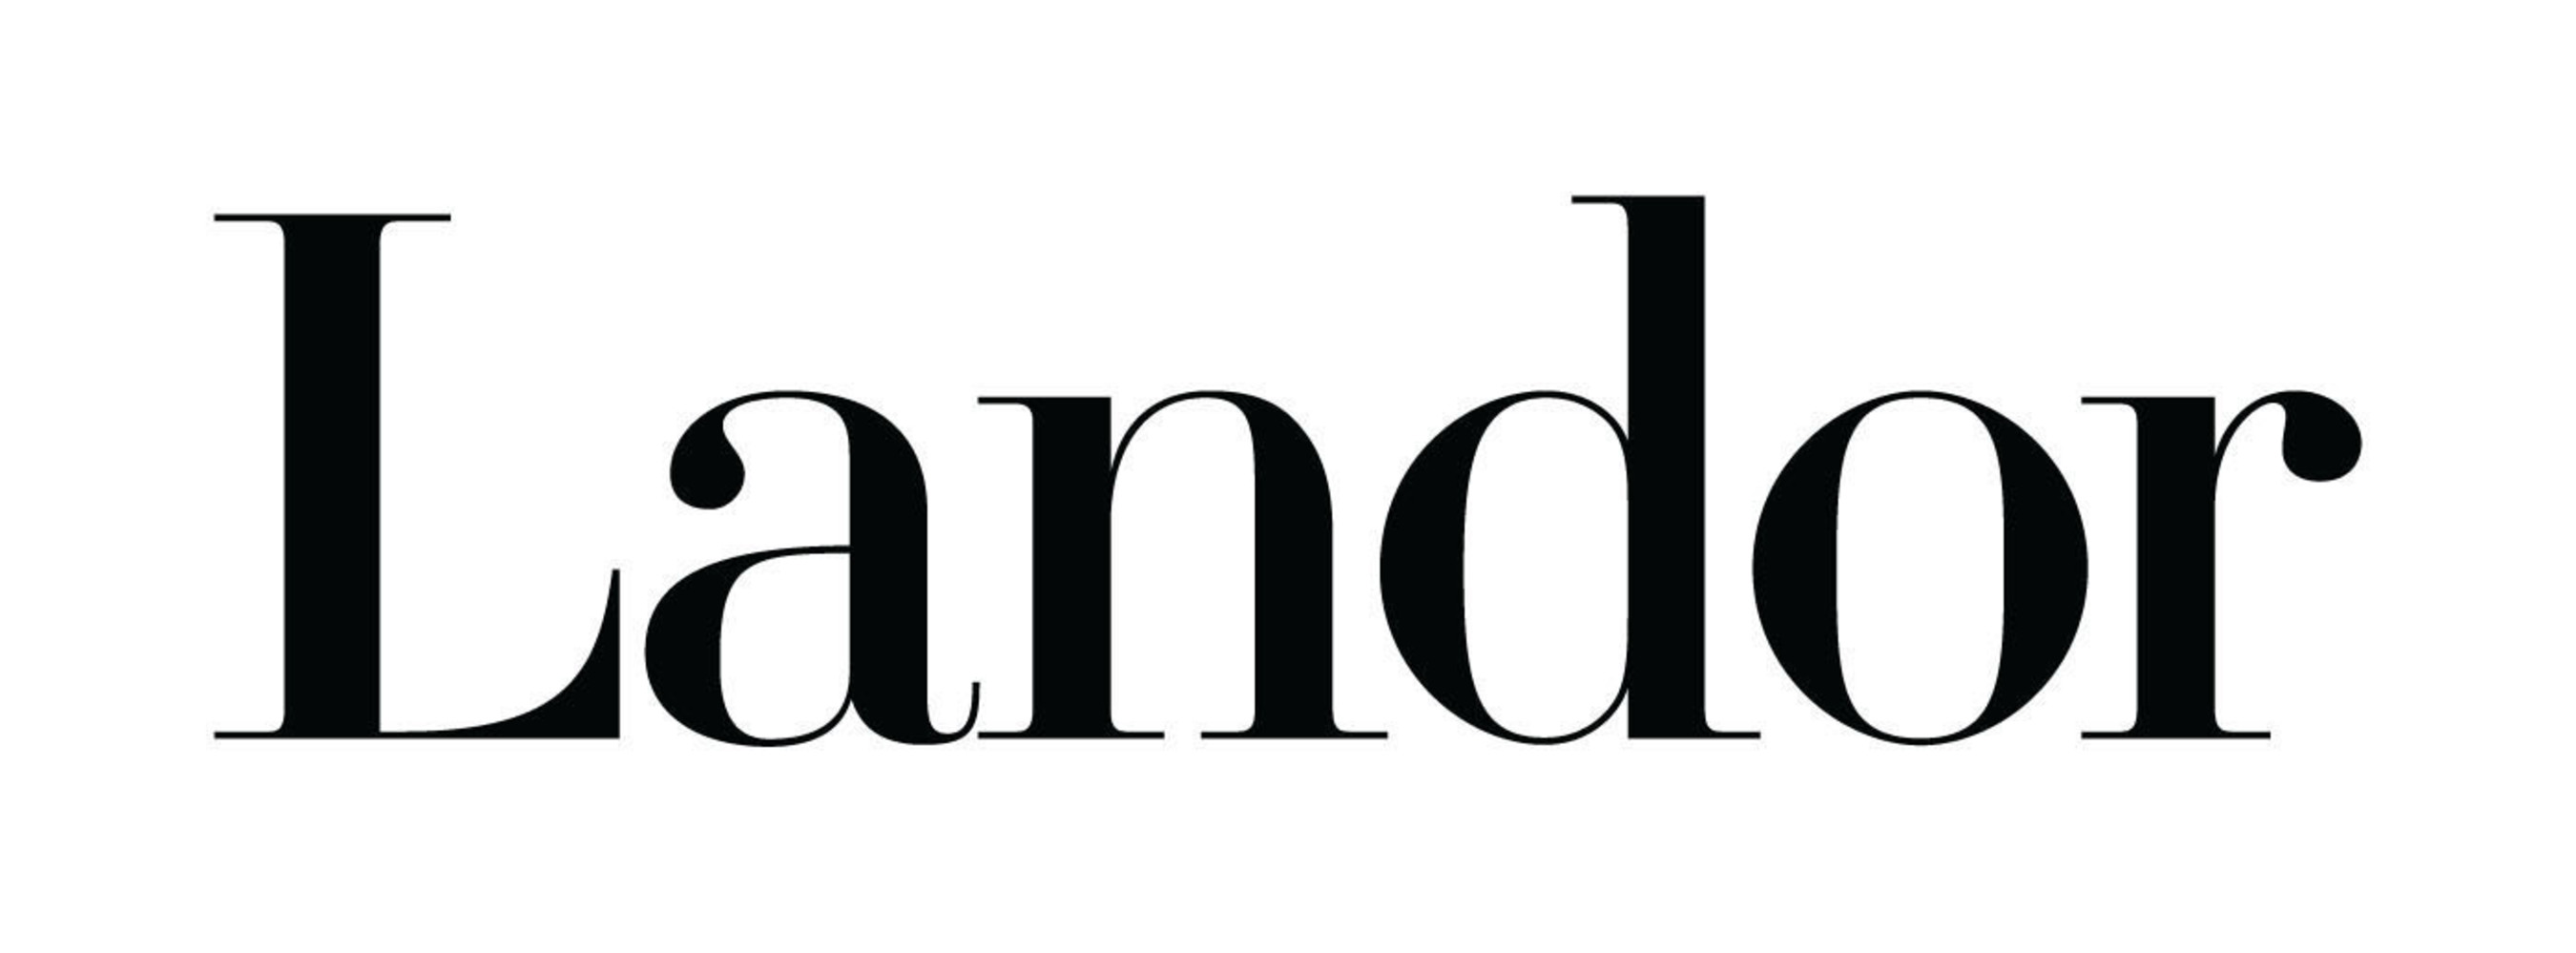 Landor Associates predicts top 10 brand trends for 2014